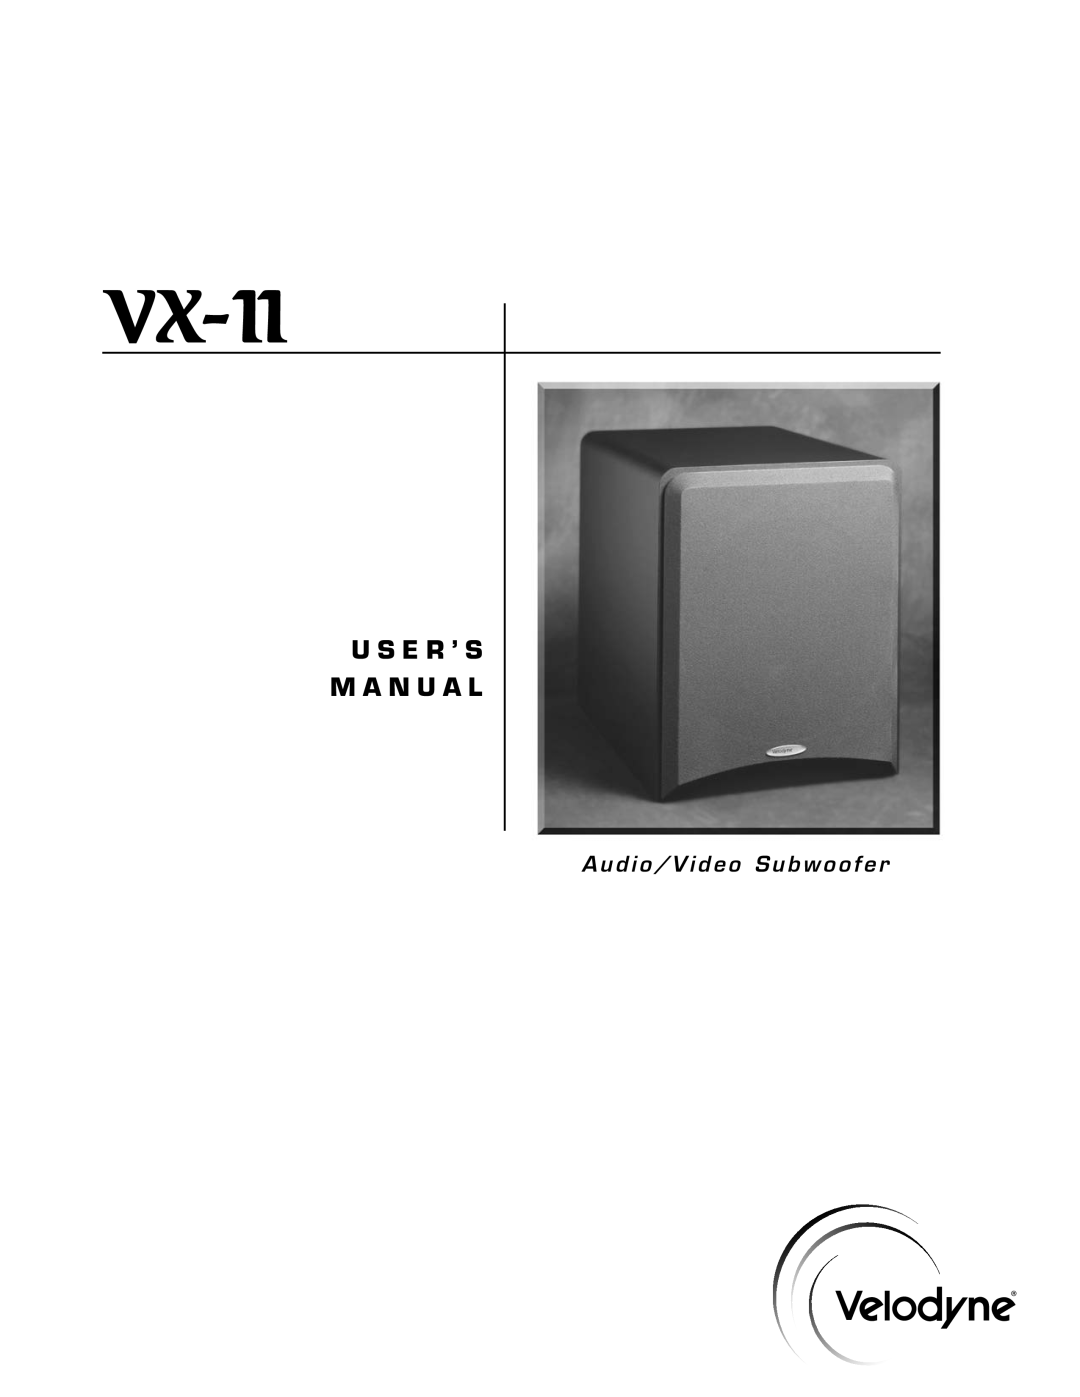 Velodyne Acoustics VX-11 user manual A u d i o / V i d e o S u b w o o f e r, U S E R ’ S M A N U A L 